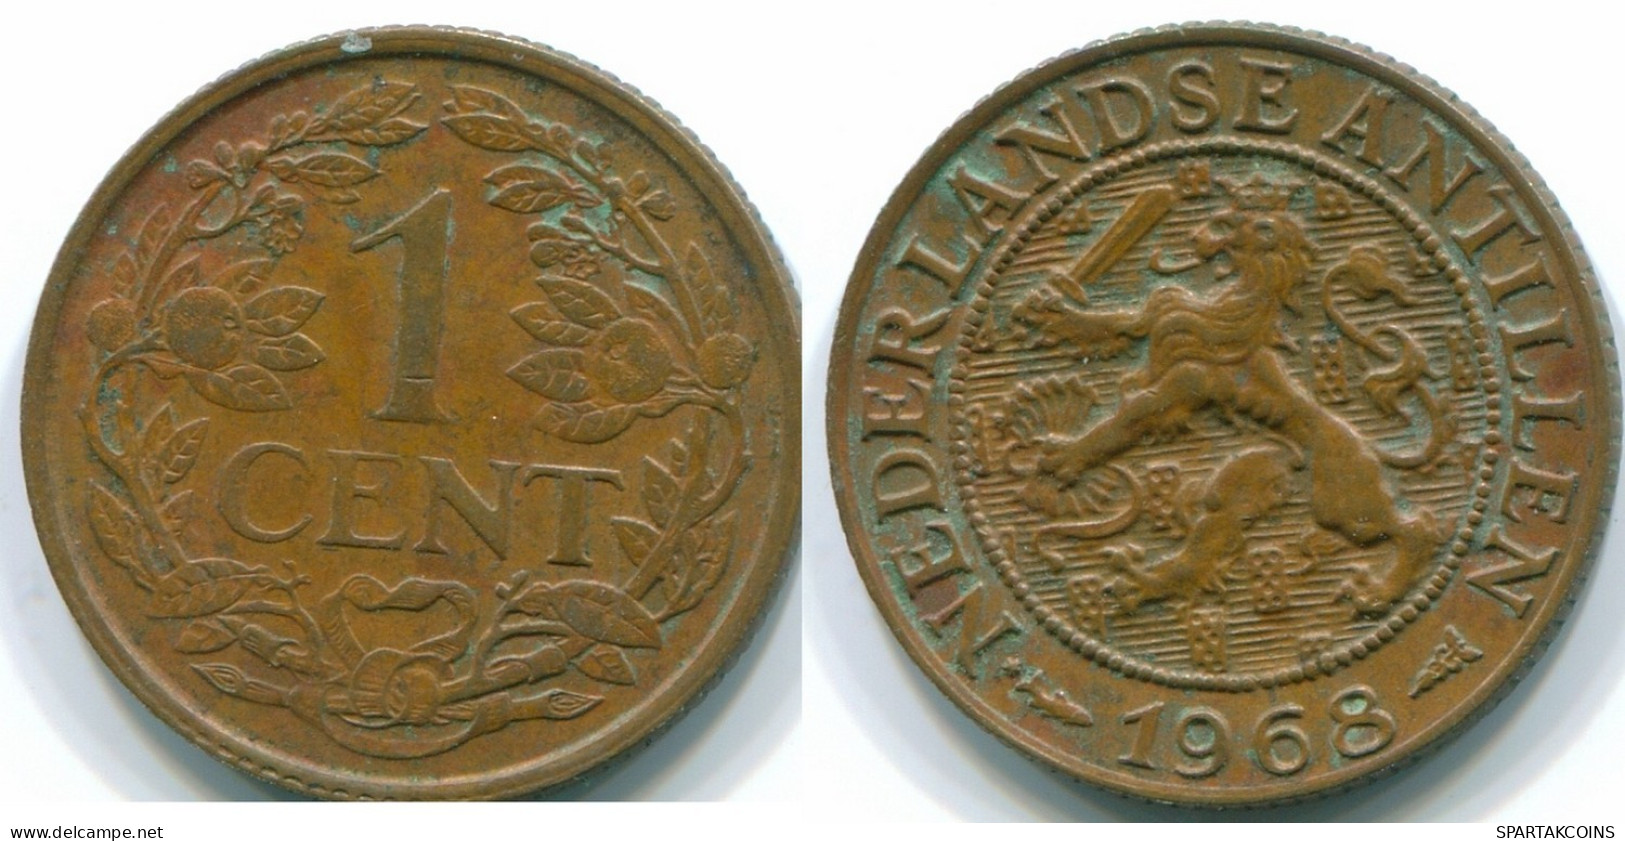 1 CENT 1968 NETHERLANDS ANTILLES Bronze Fish Colonial Coin #S10770.U.A - Antille Olandesi